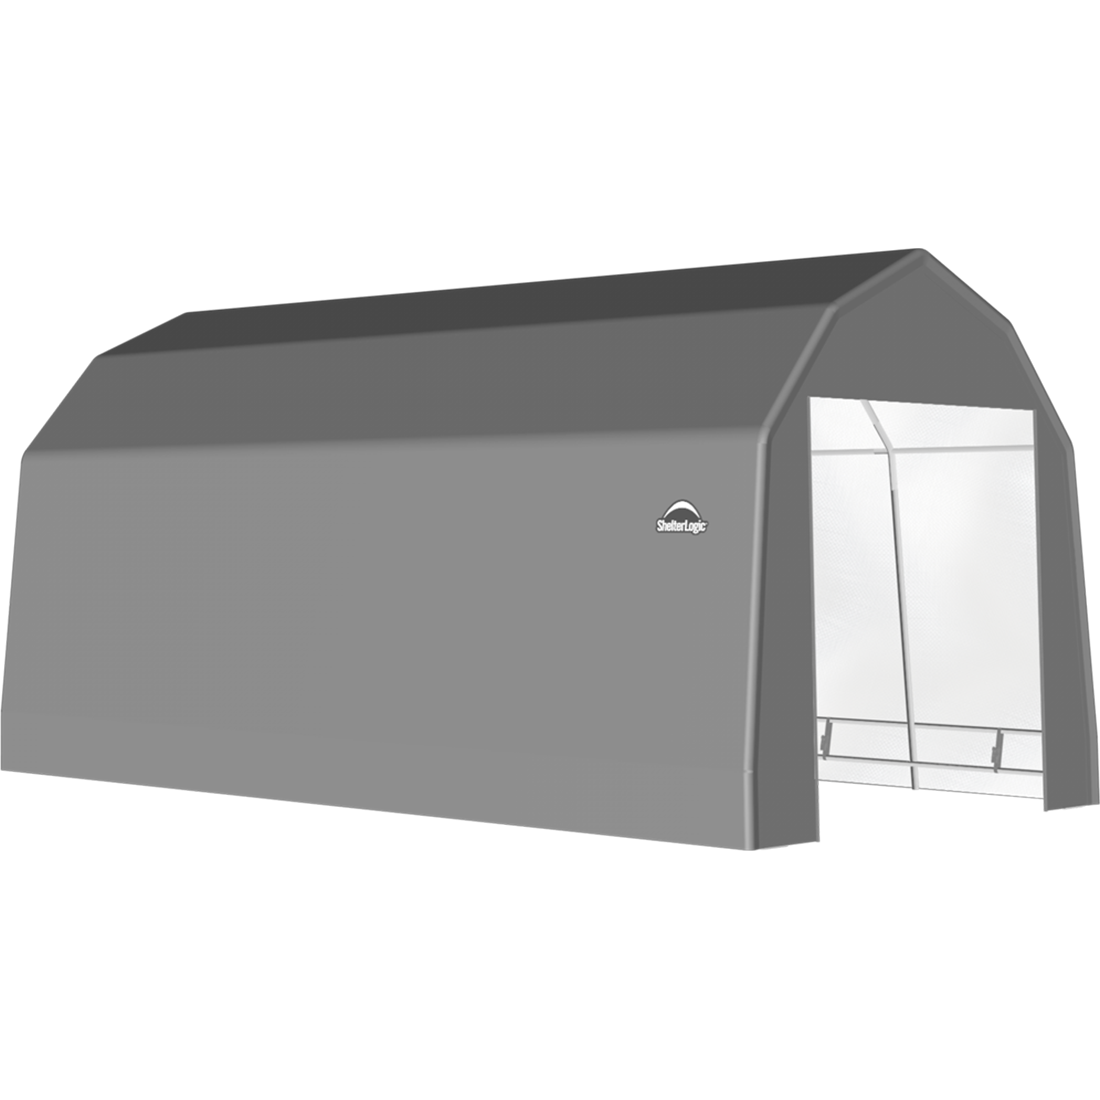 ShelterTech SP Series Barn Shelter, 12 ft. x 20 ft. x 11 ft. Heavy Duty PVC 14.5 oz. Gray